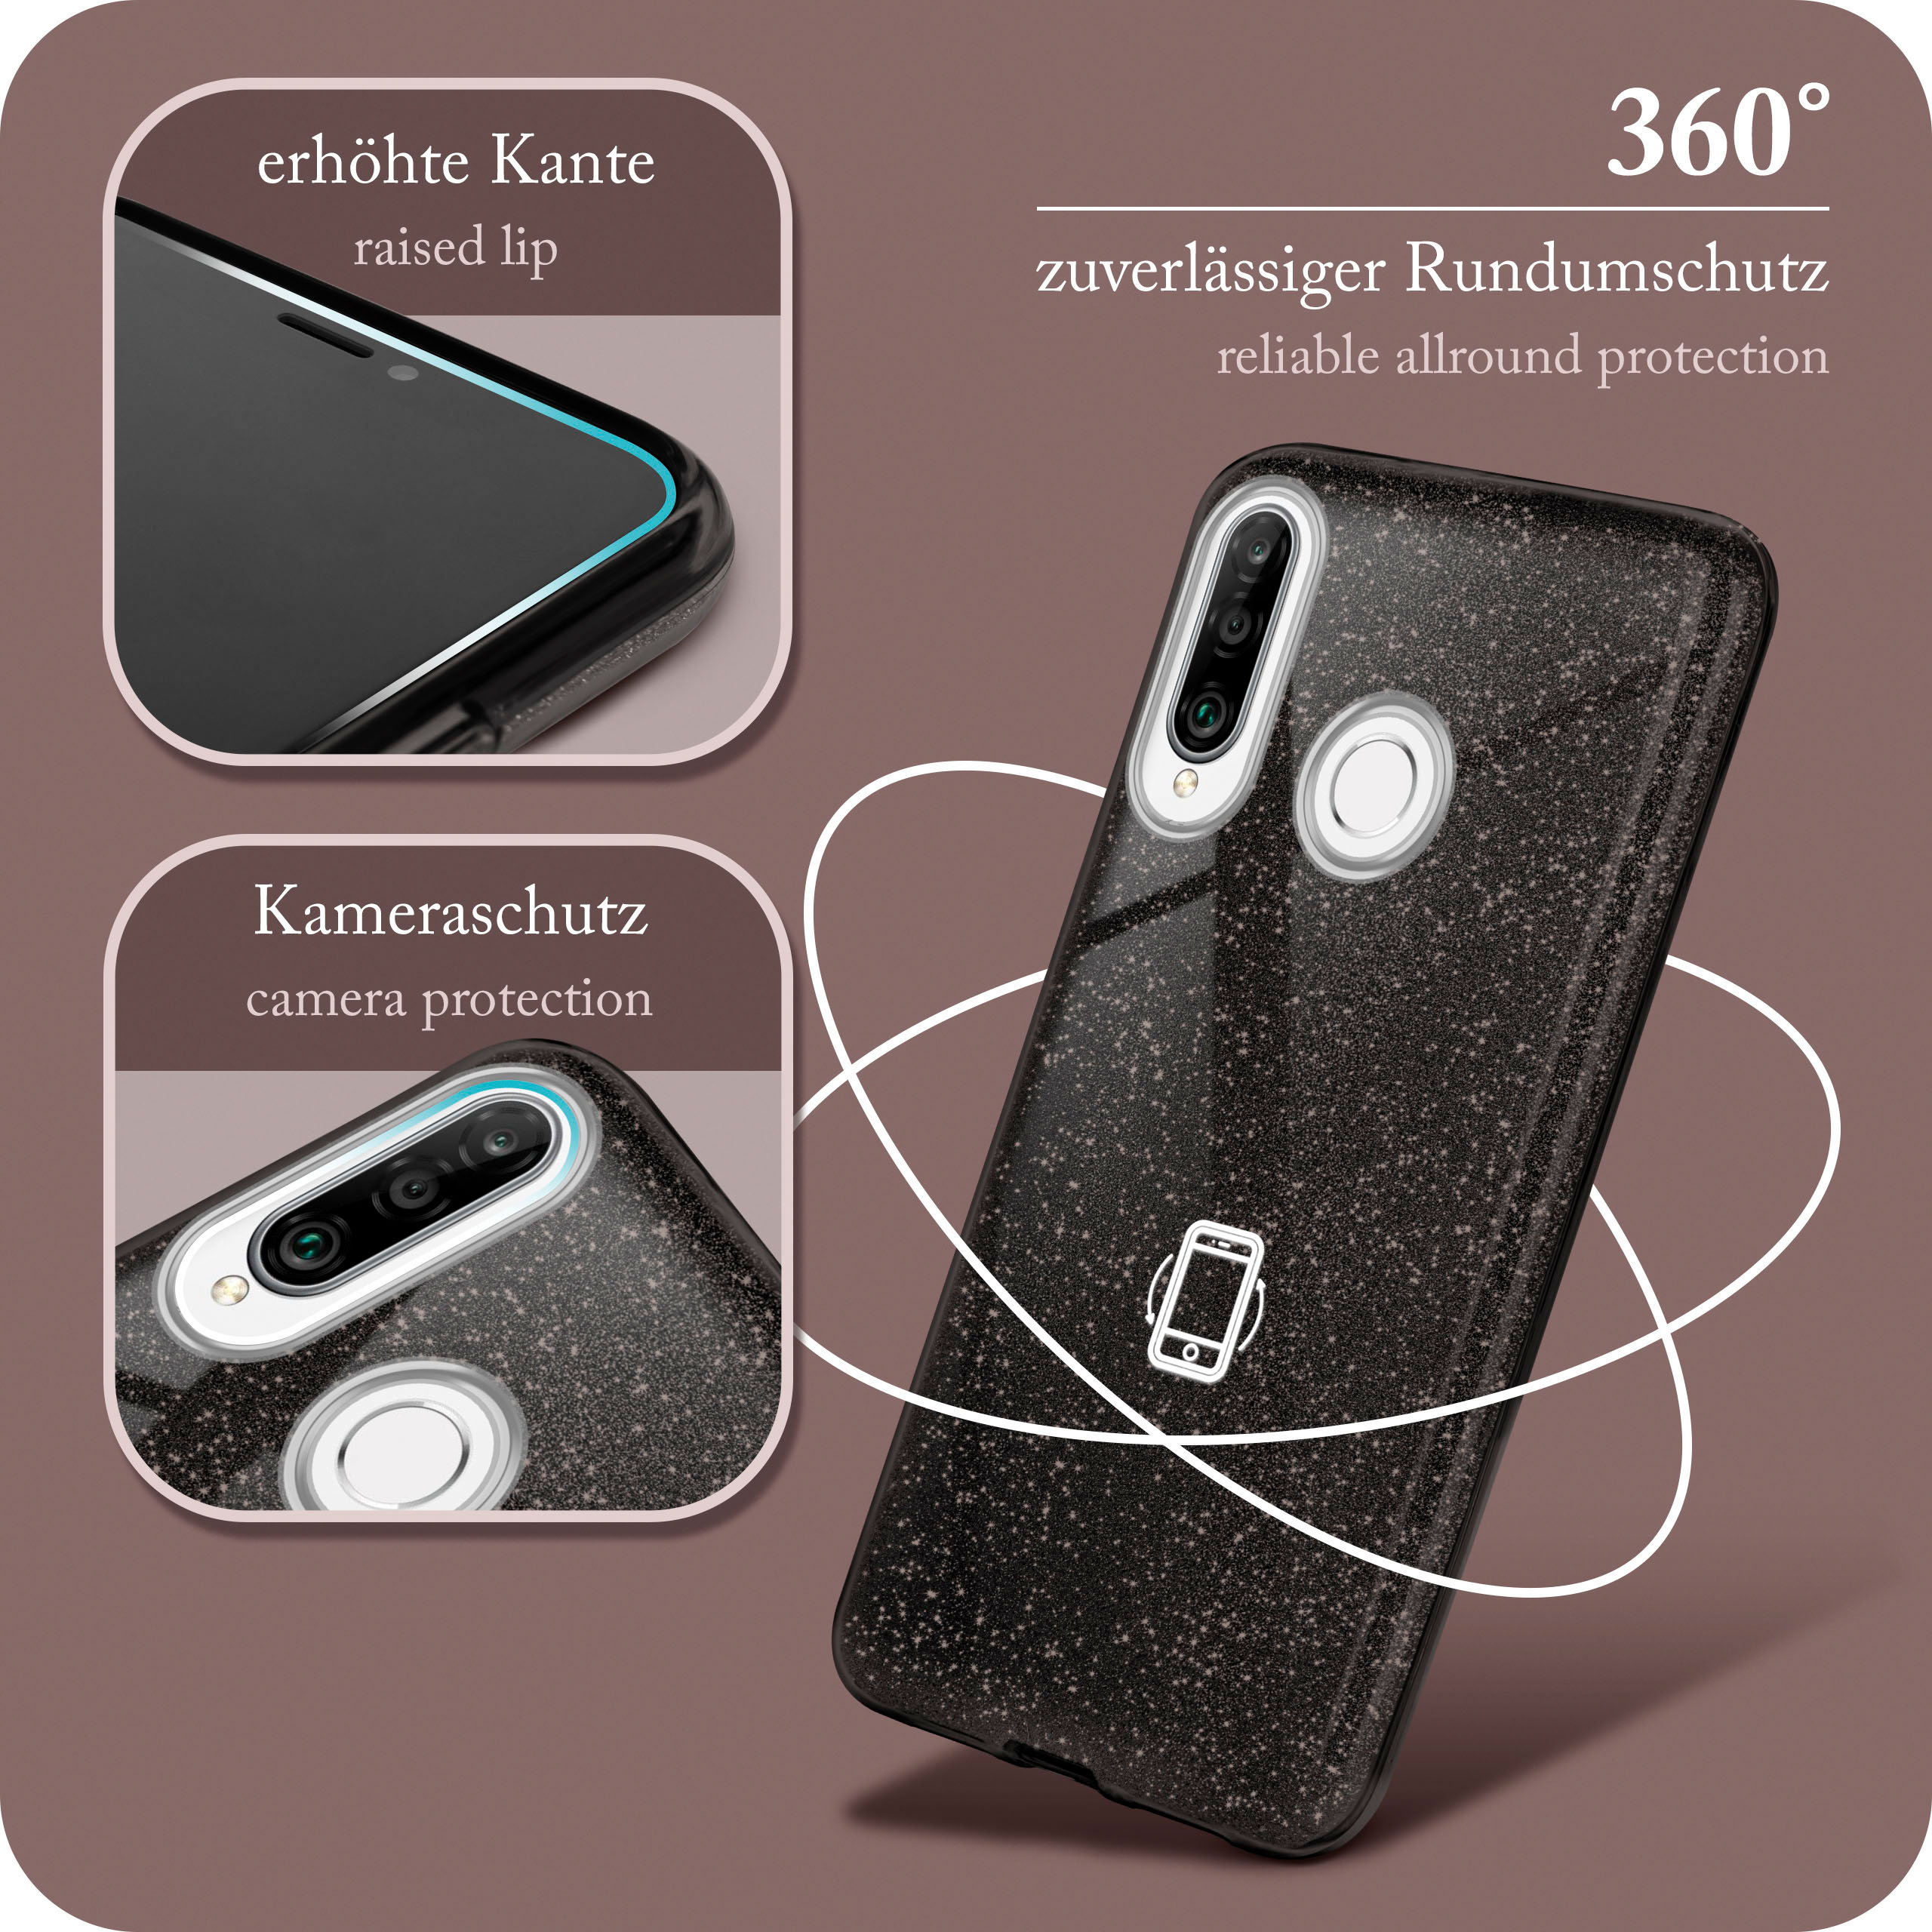 Backcover, P30 - Case, ONEFLOW Huawei, Black Glamour Lite New, Lite/P30 Glitter